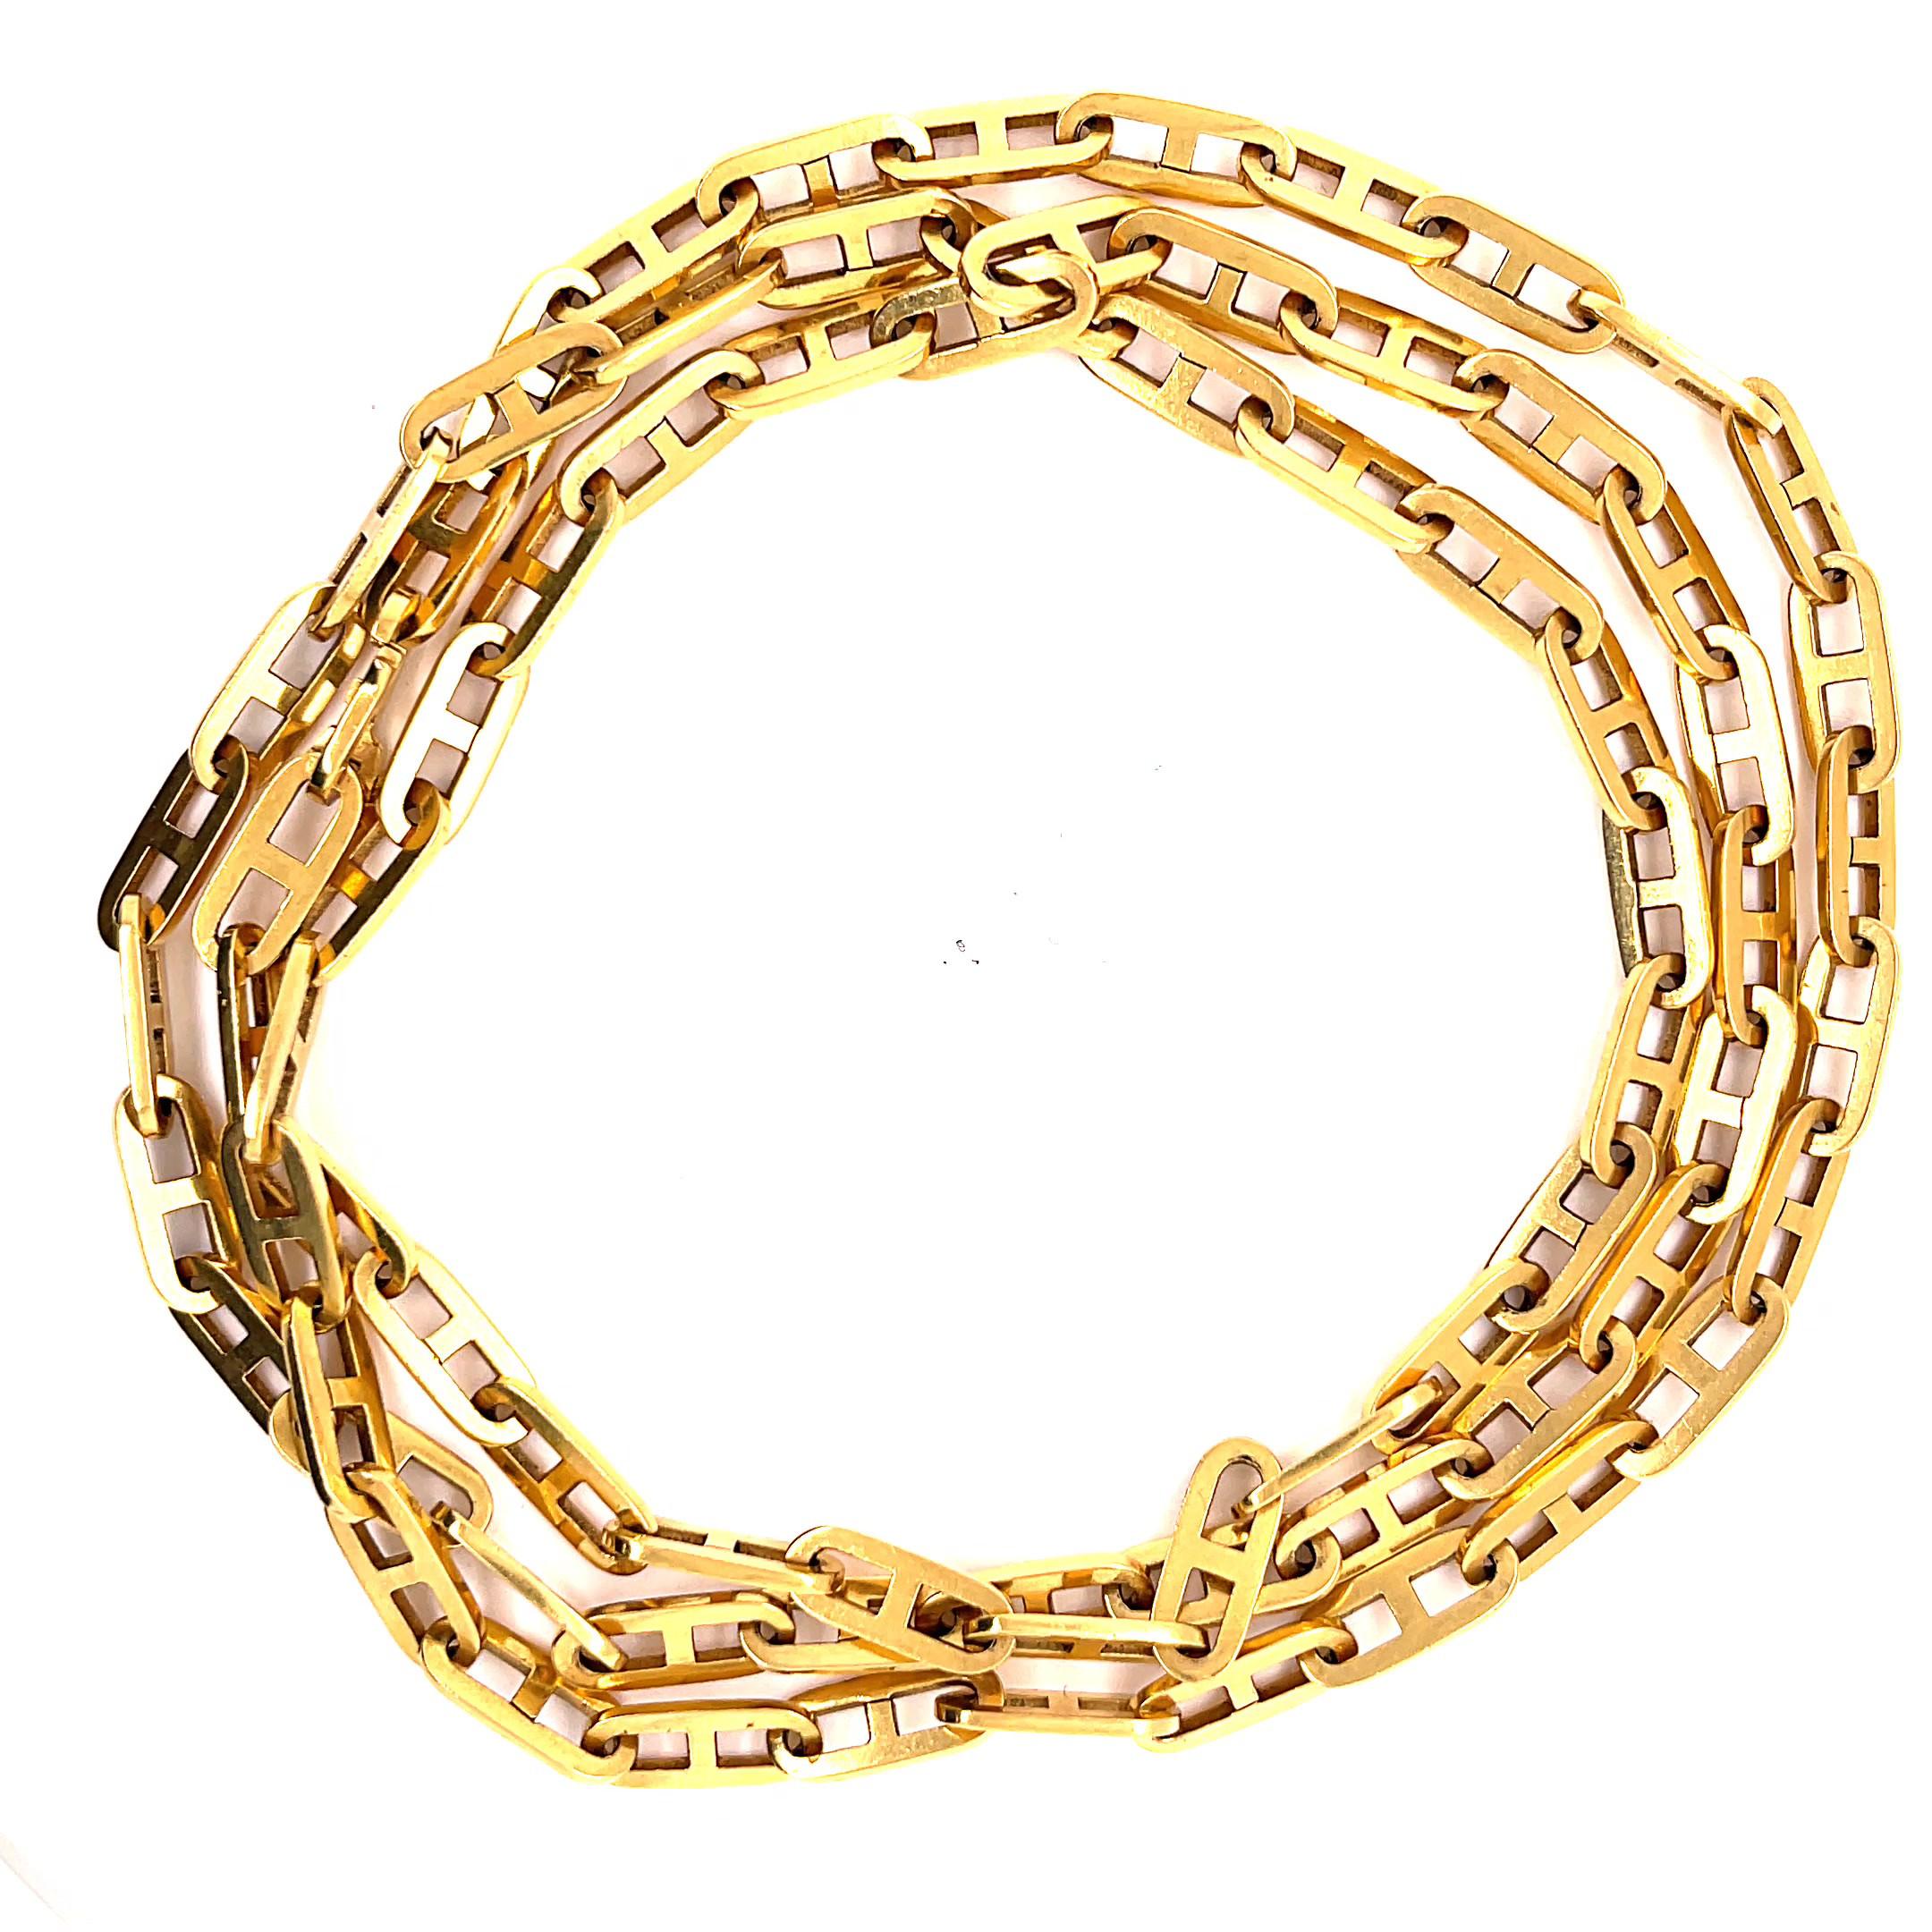 nawabi gold chain design